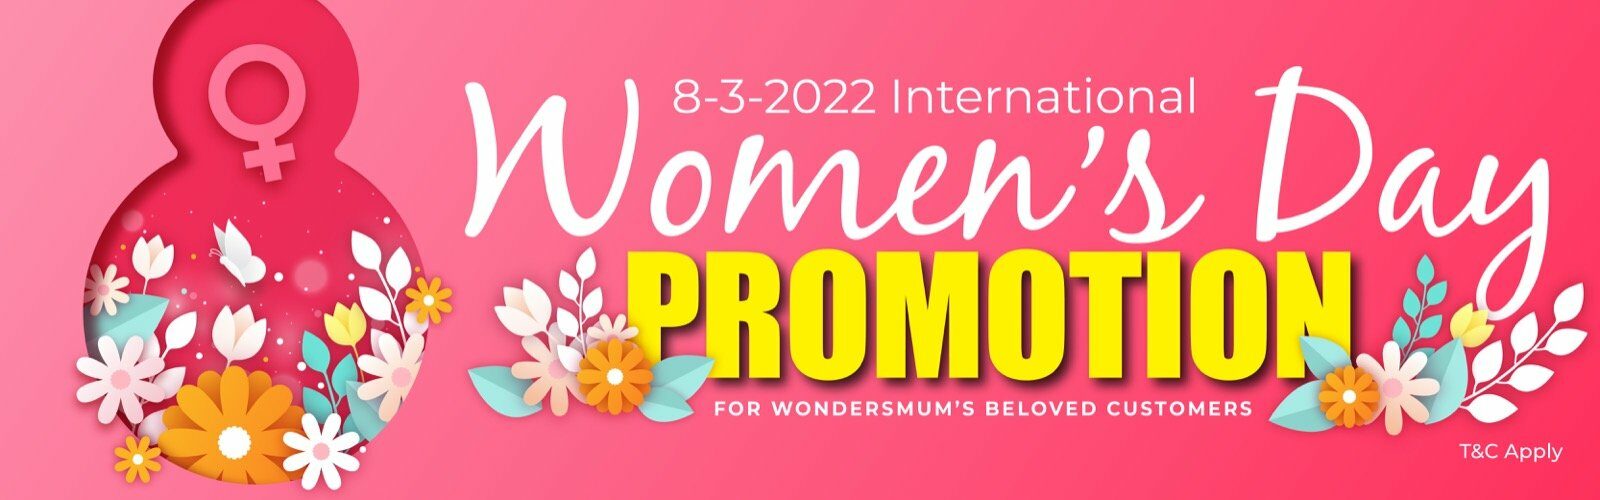 Wondersmum | Woman day 1600x500 p1 01